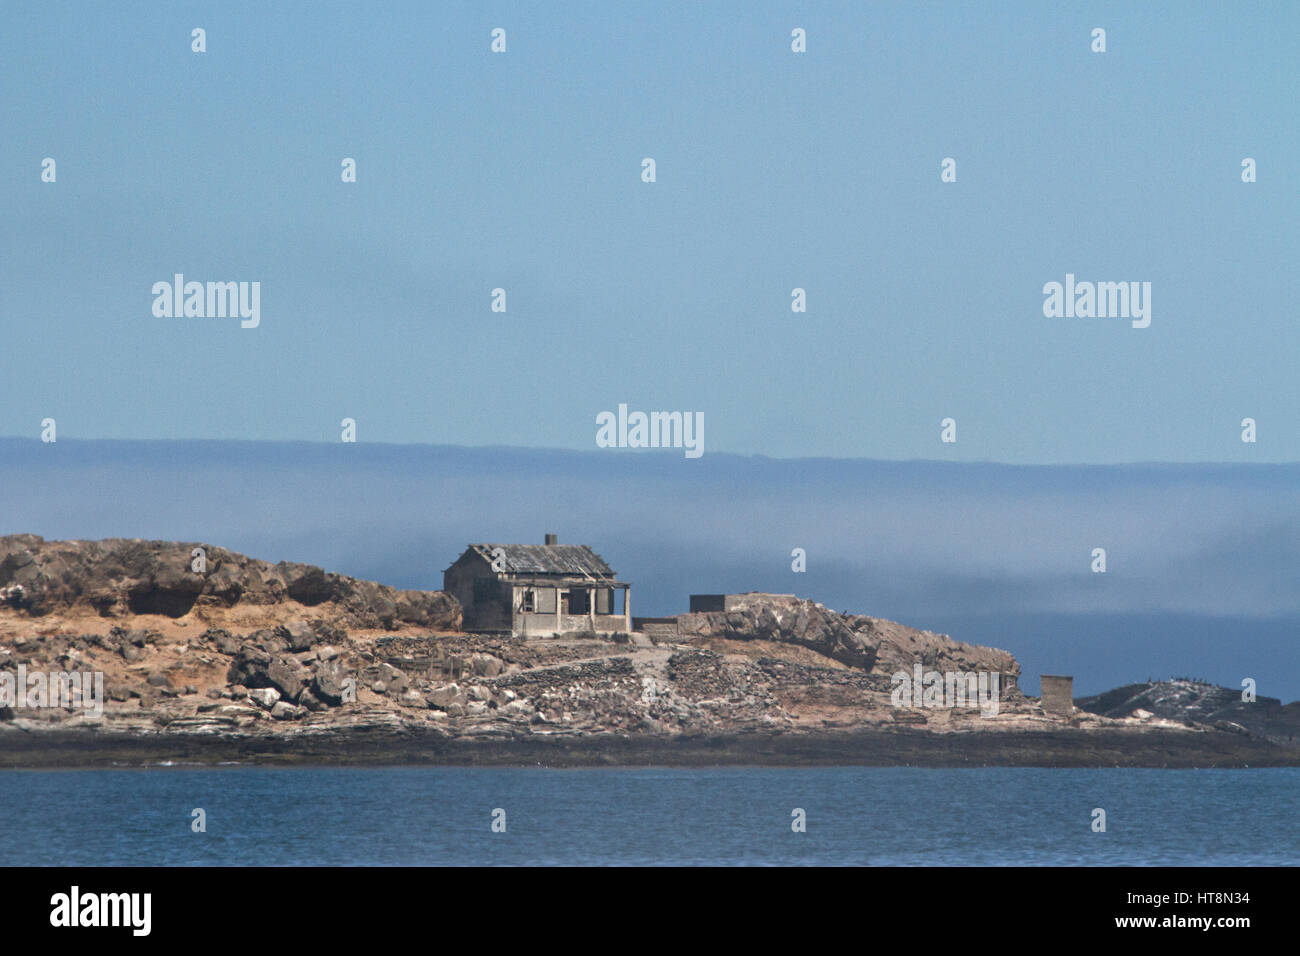 House on Halifax Island,  Diaz Point, Namibia Stock Photo